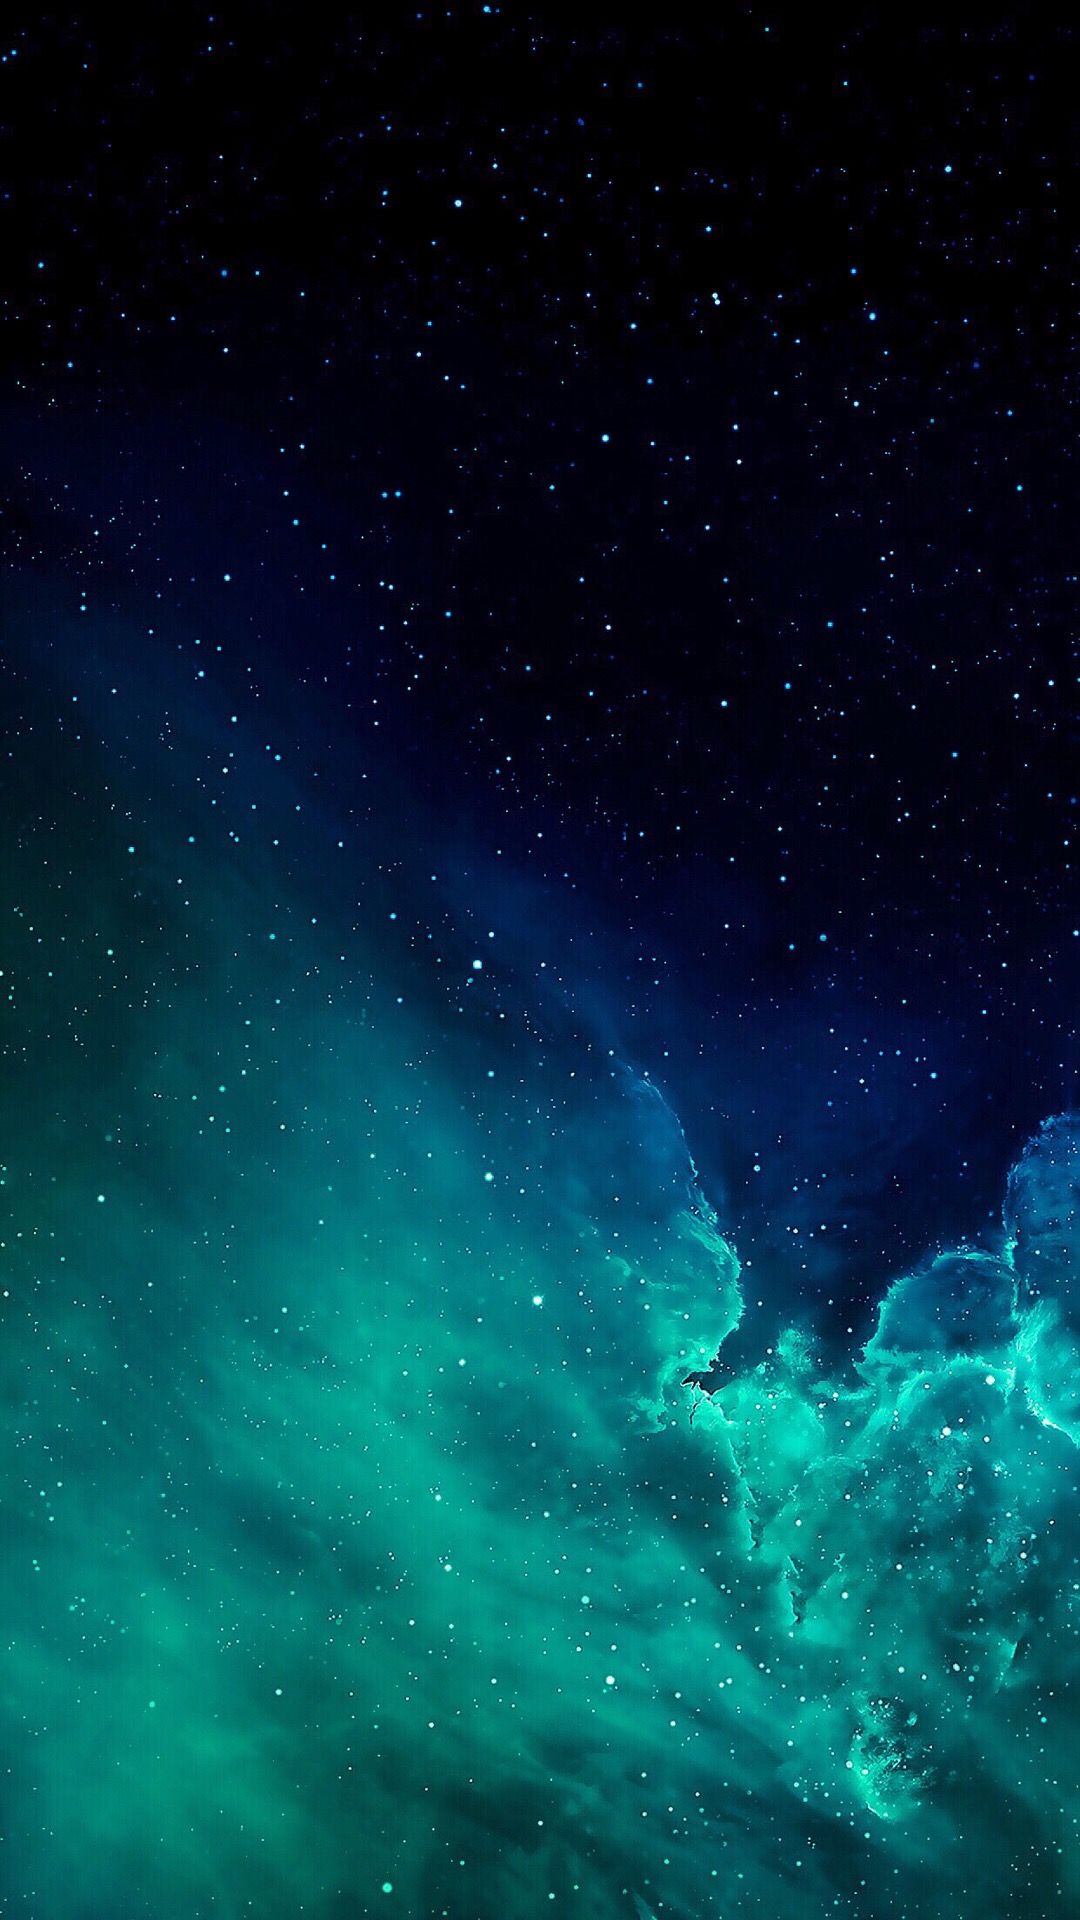 4k Nebula Wallpaper Iphone X - HD Wallpaper 